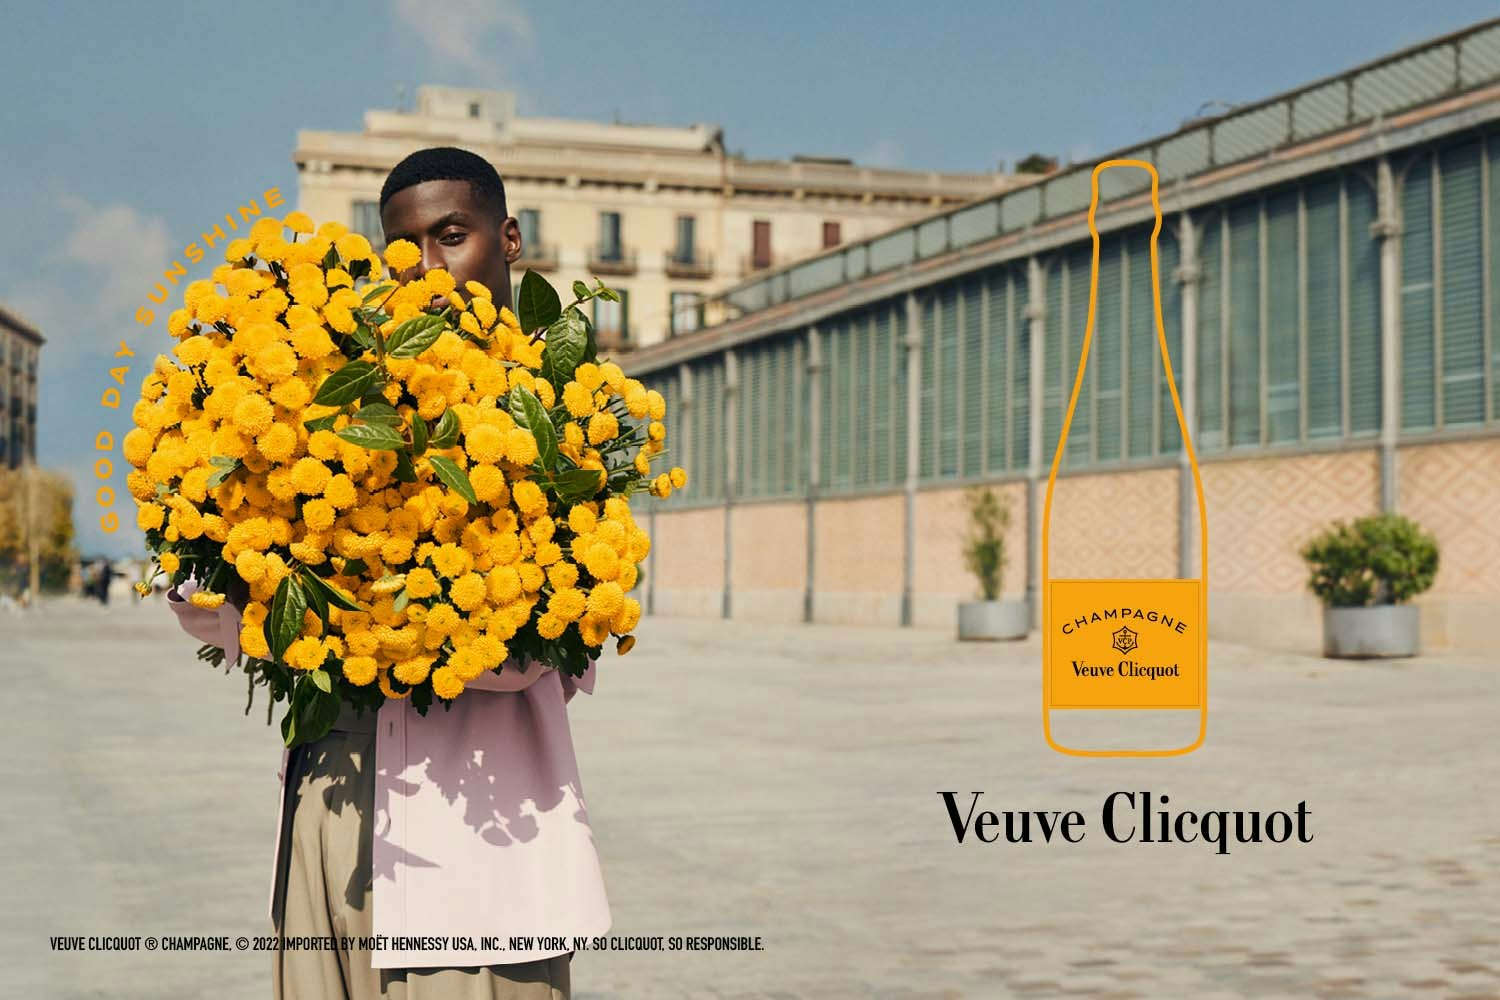 Buy Veuve Clicquot Brut Yellow Label Champagne Online » Order